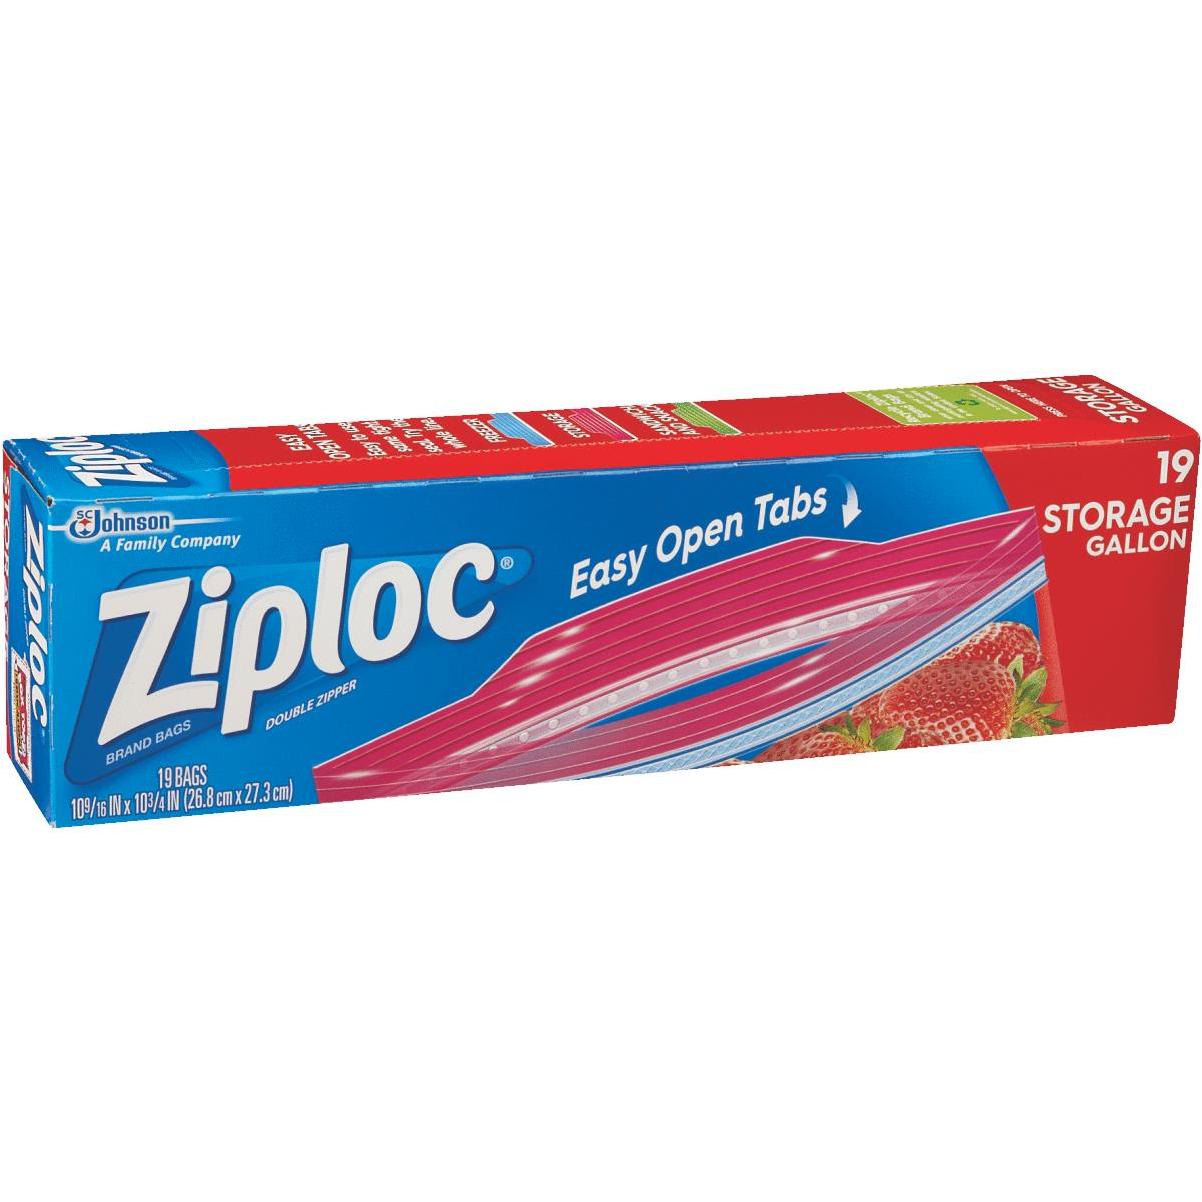 Ziploc 71592 Ziploc Heavy Duty Big Bag: Large Storage Bags